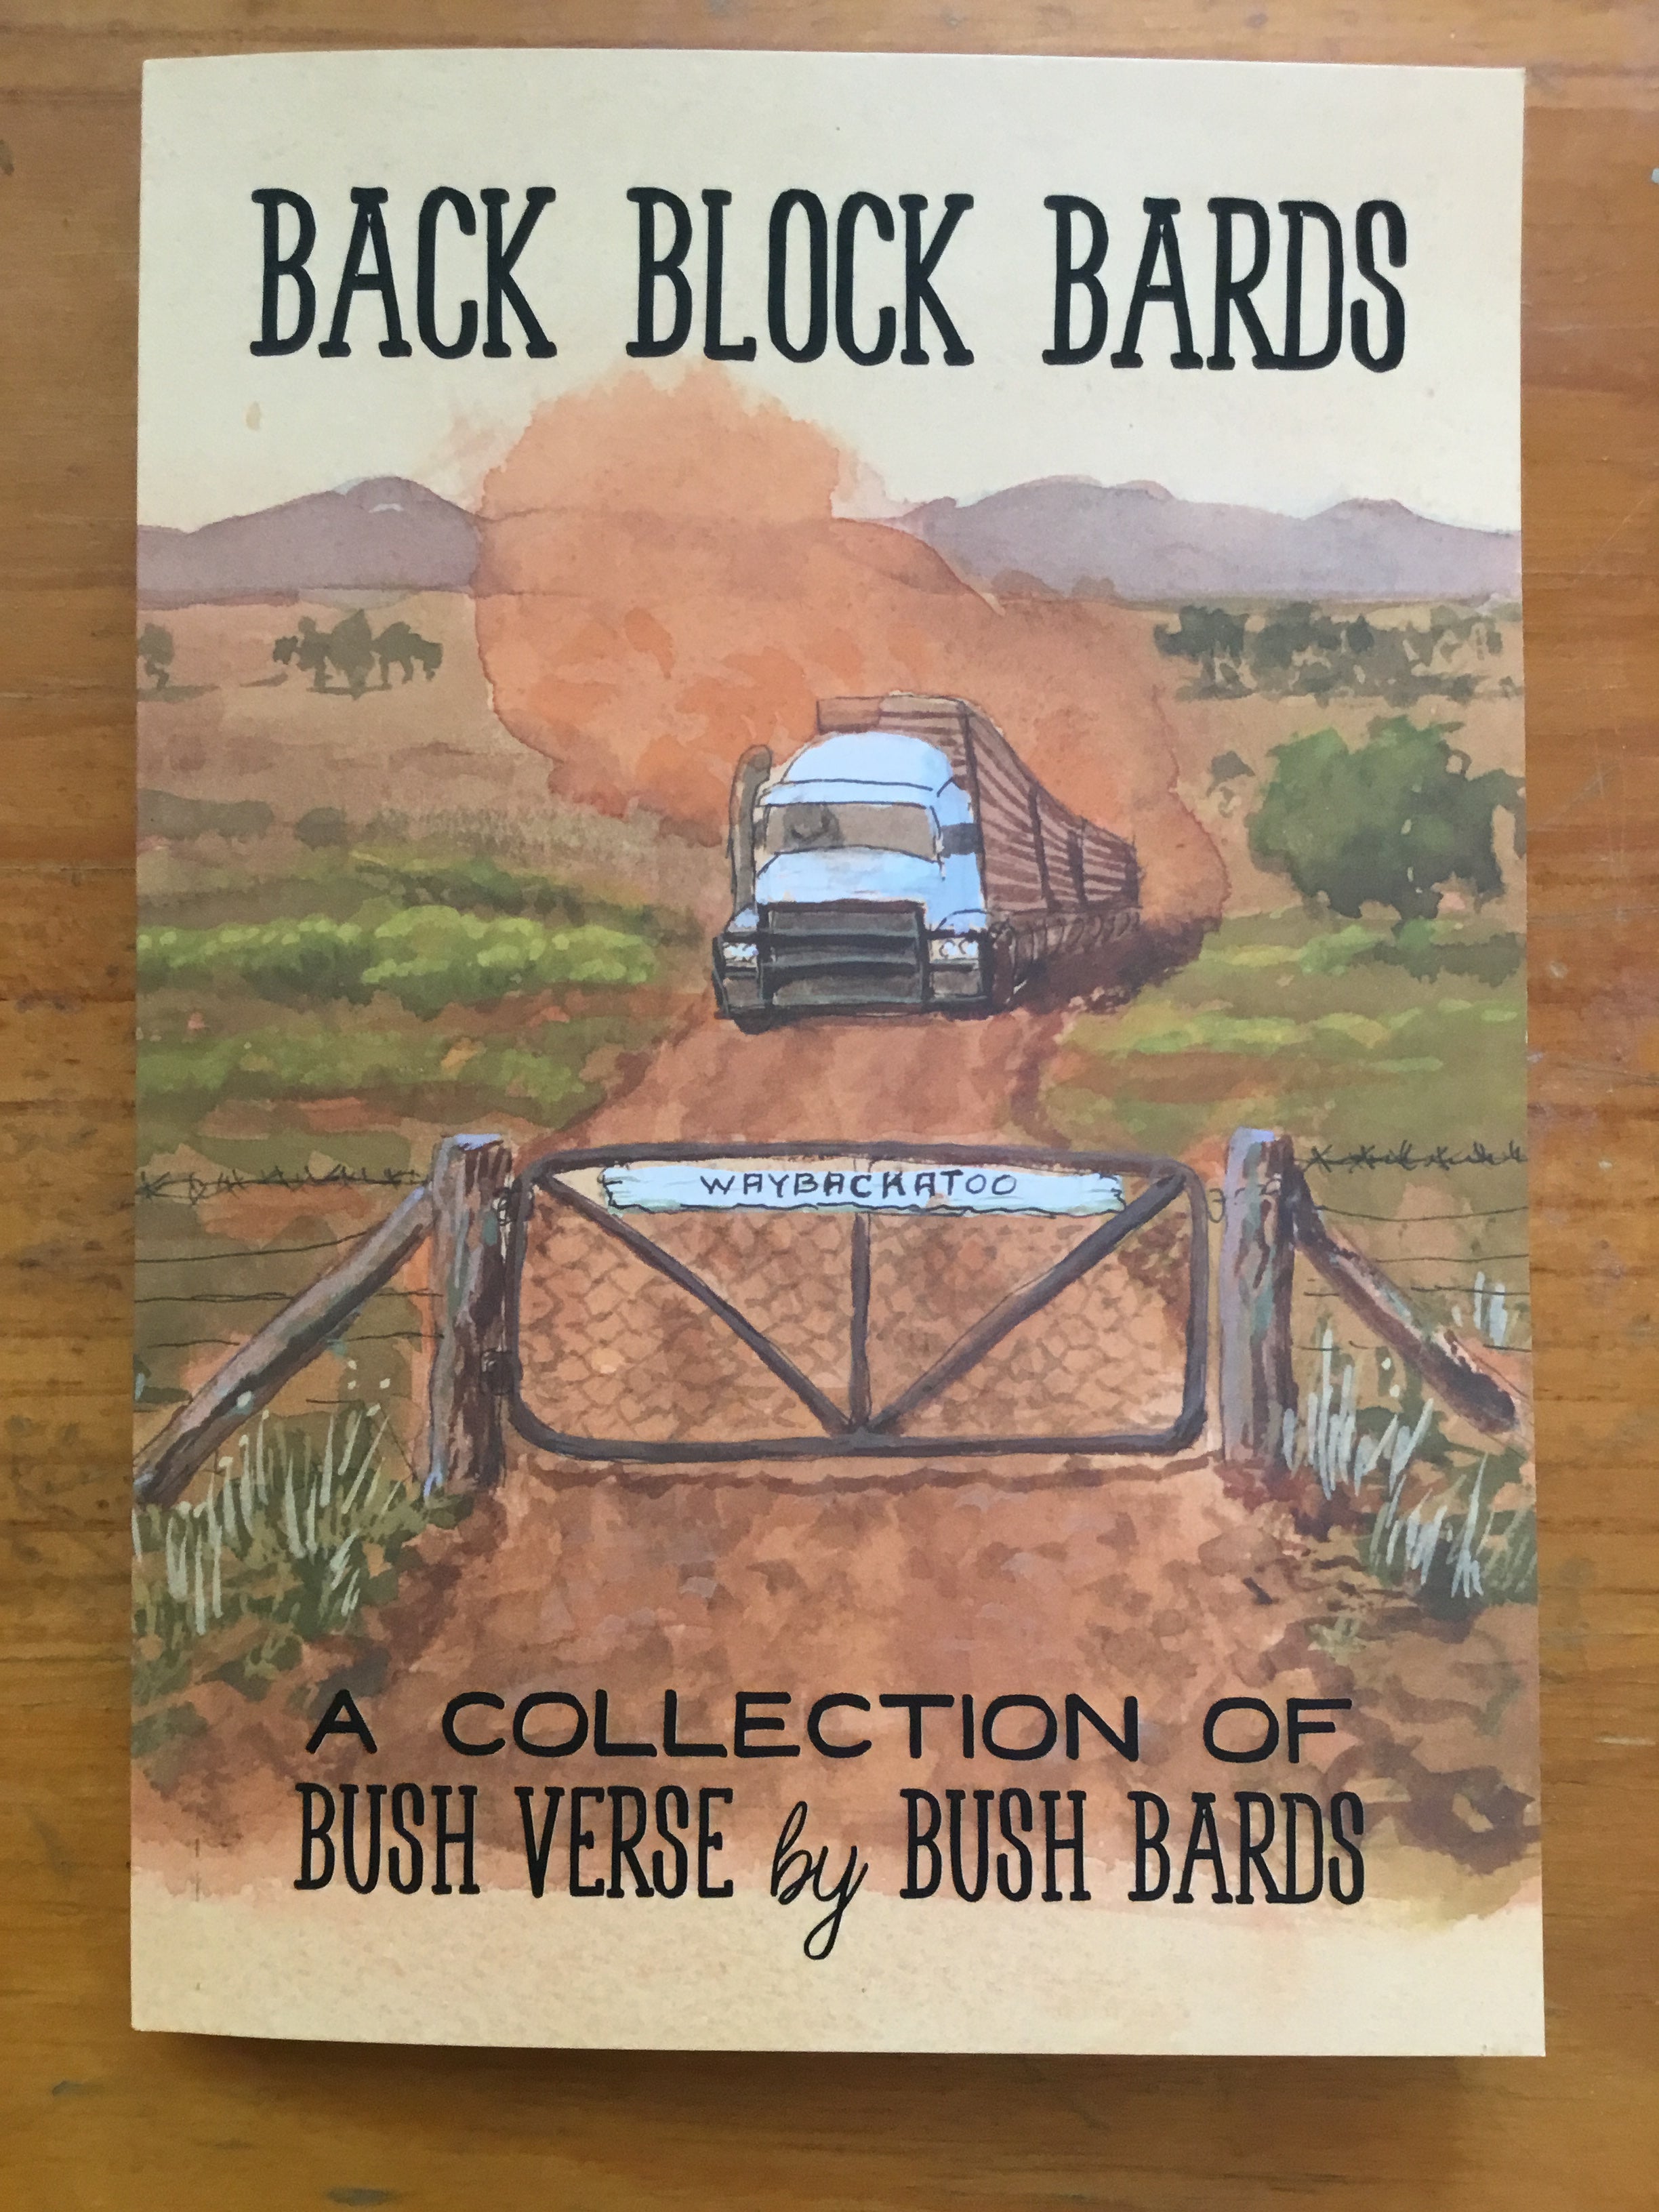 Back Block Bards - A Collection of Bush Verse by Bush Bards